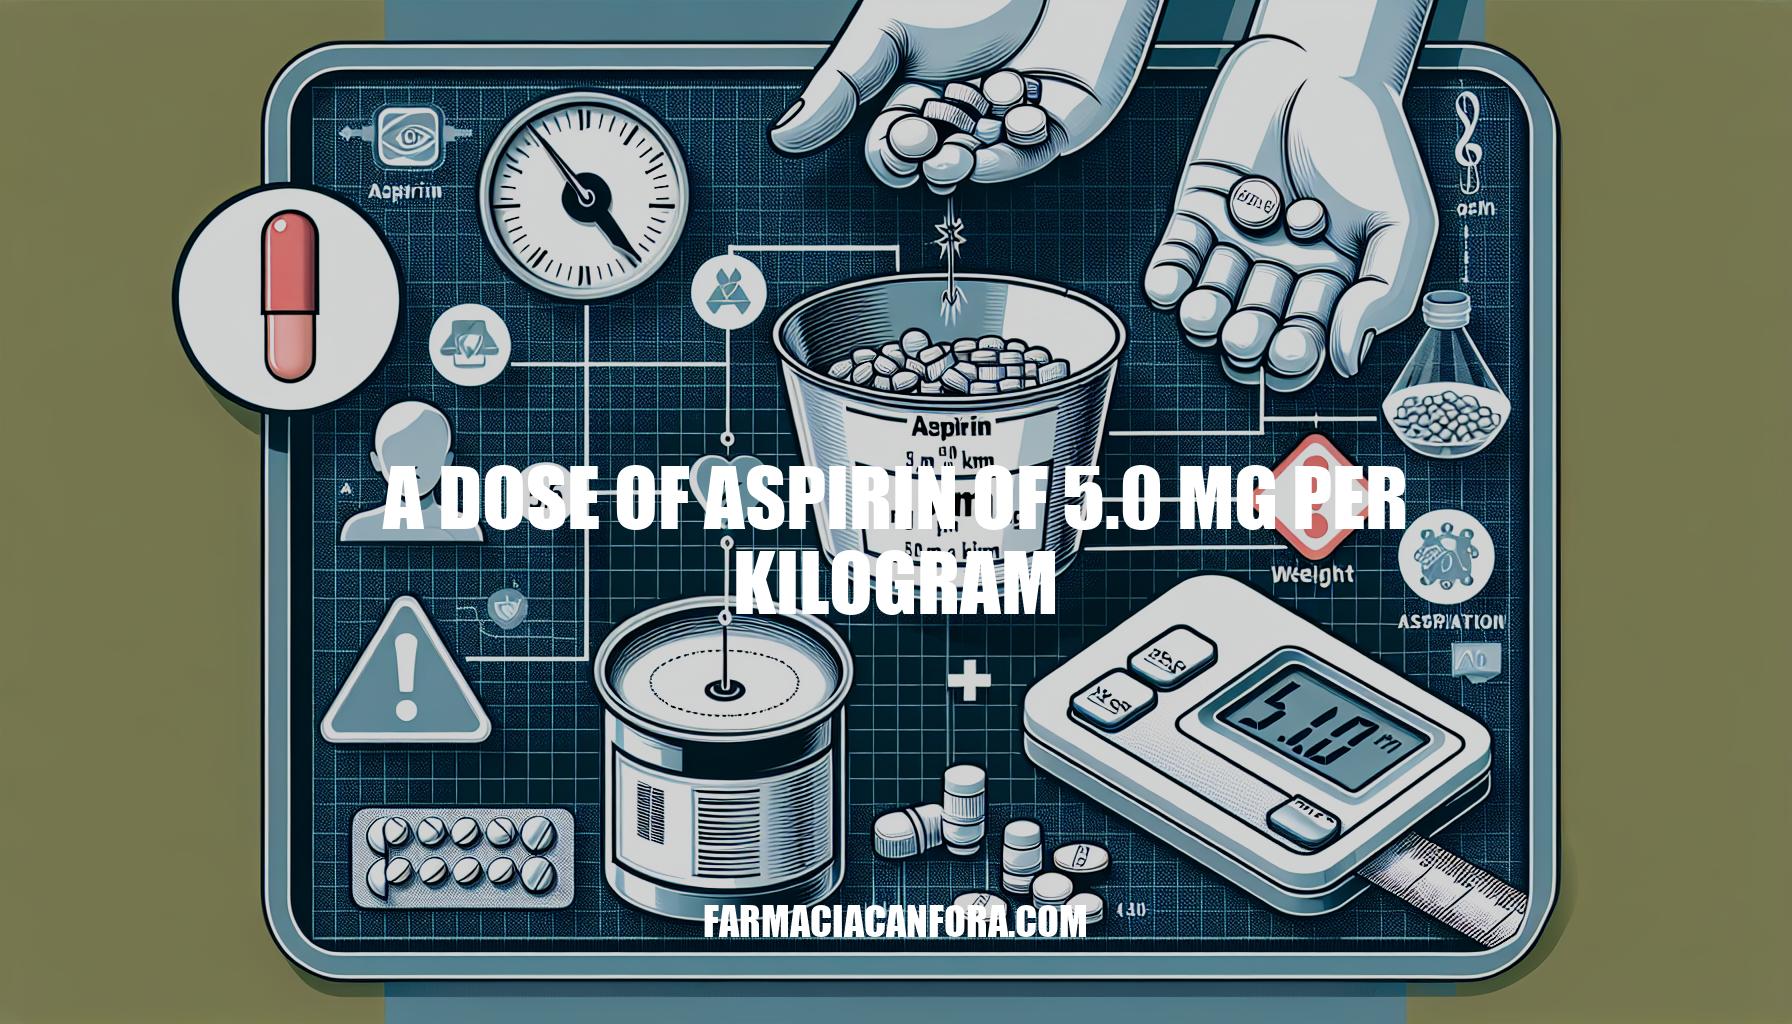 Administering a Dose of Aspirin of 5.0 mg per Kilogram: Uses, Risks, and Precautions